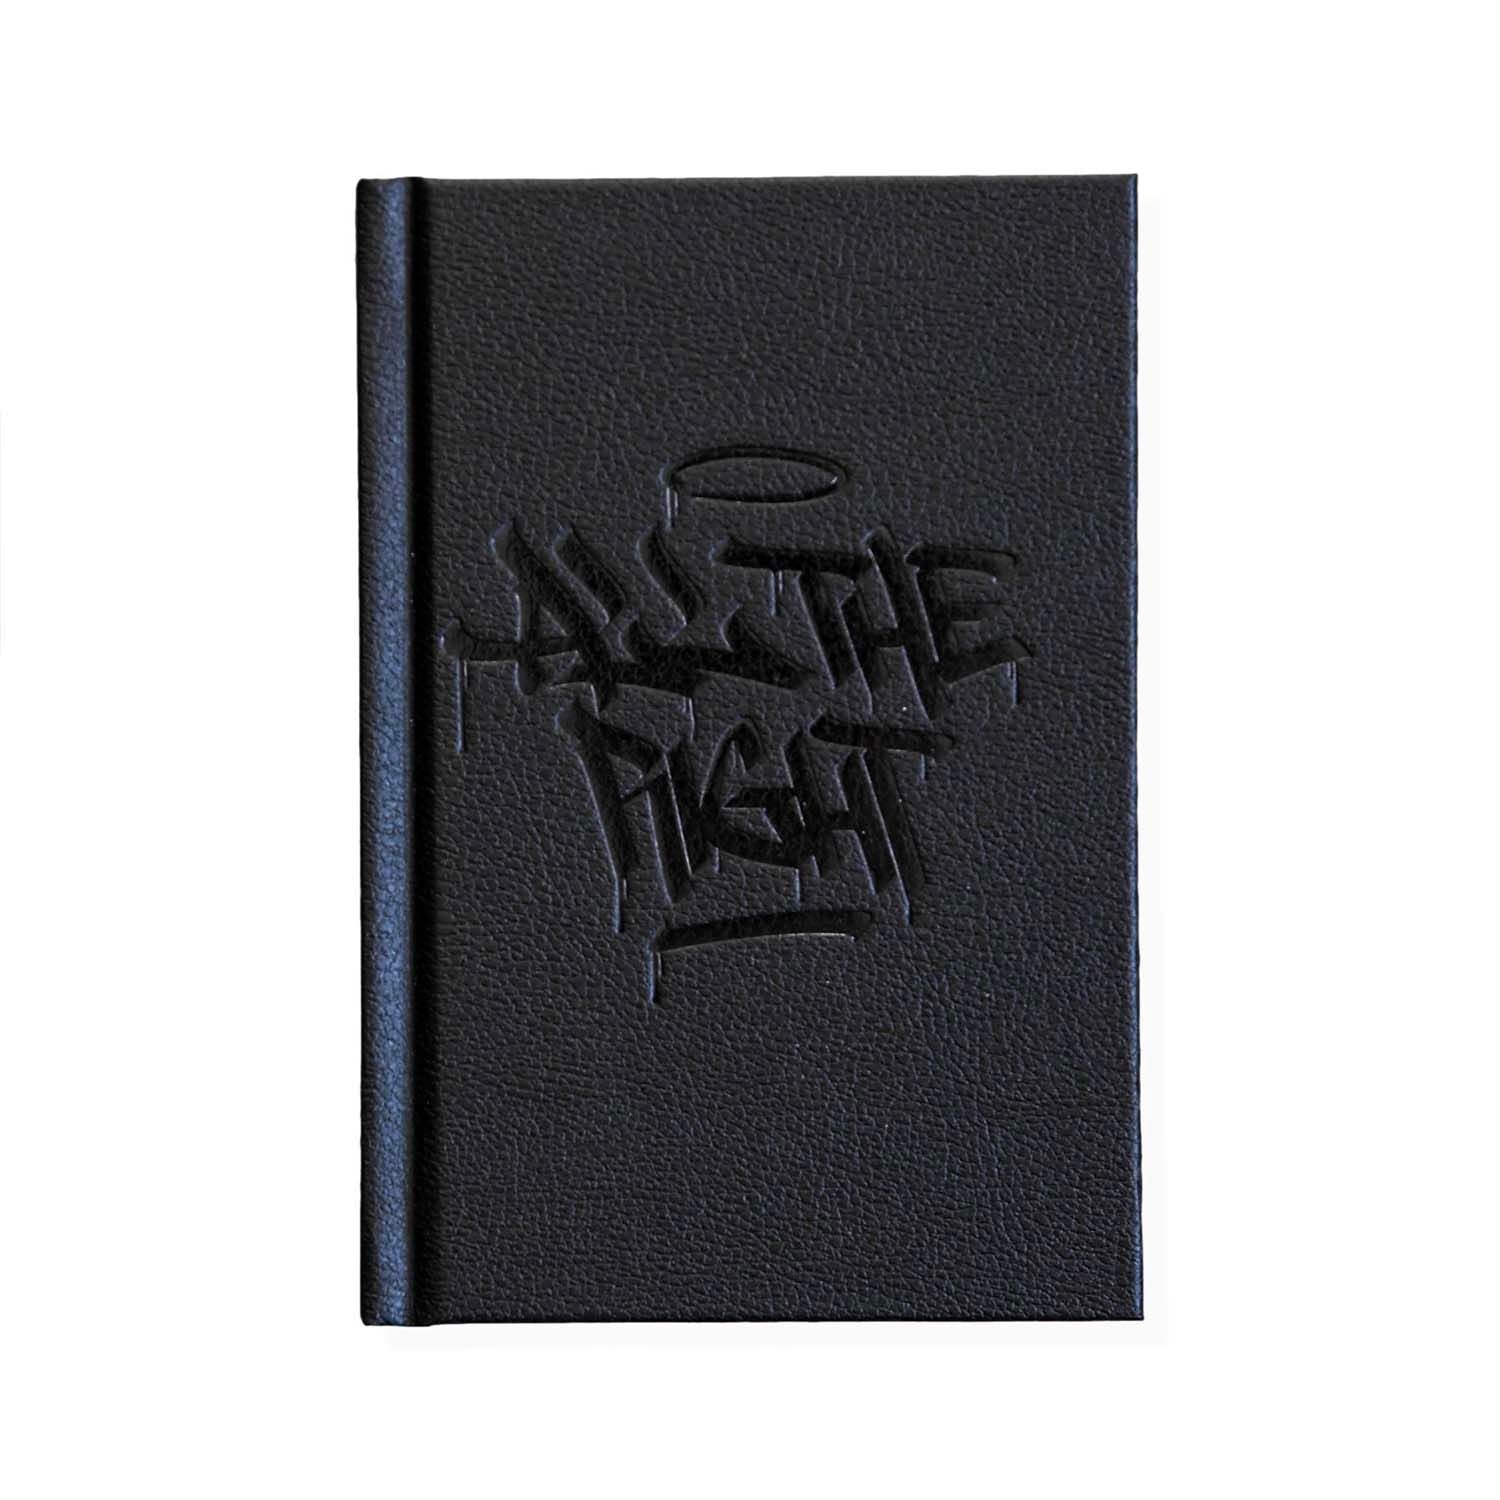 All The Right Black Book